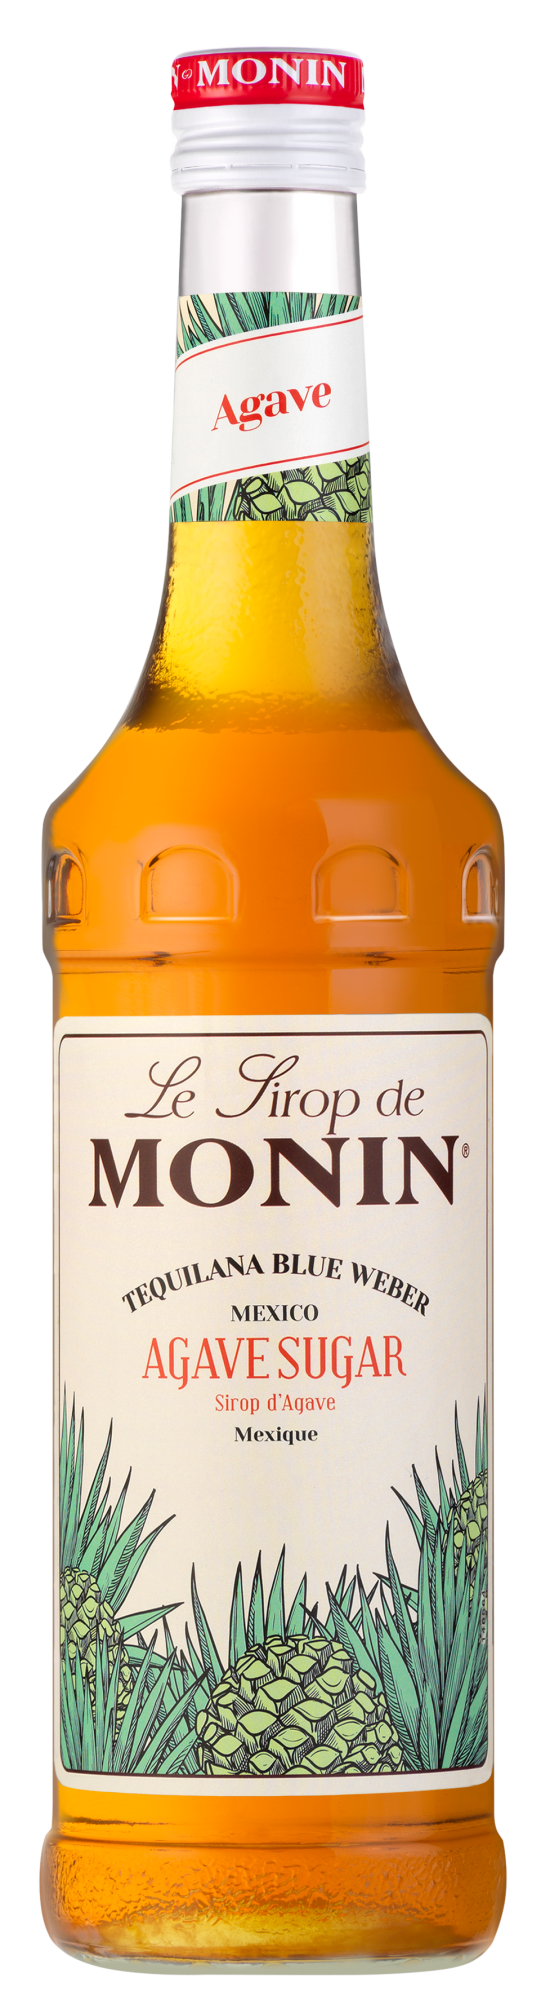 Monin Agave Syrup at Rs 2400/bottle